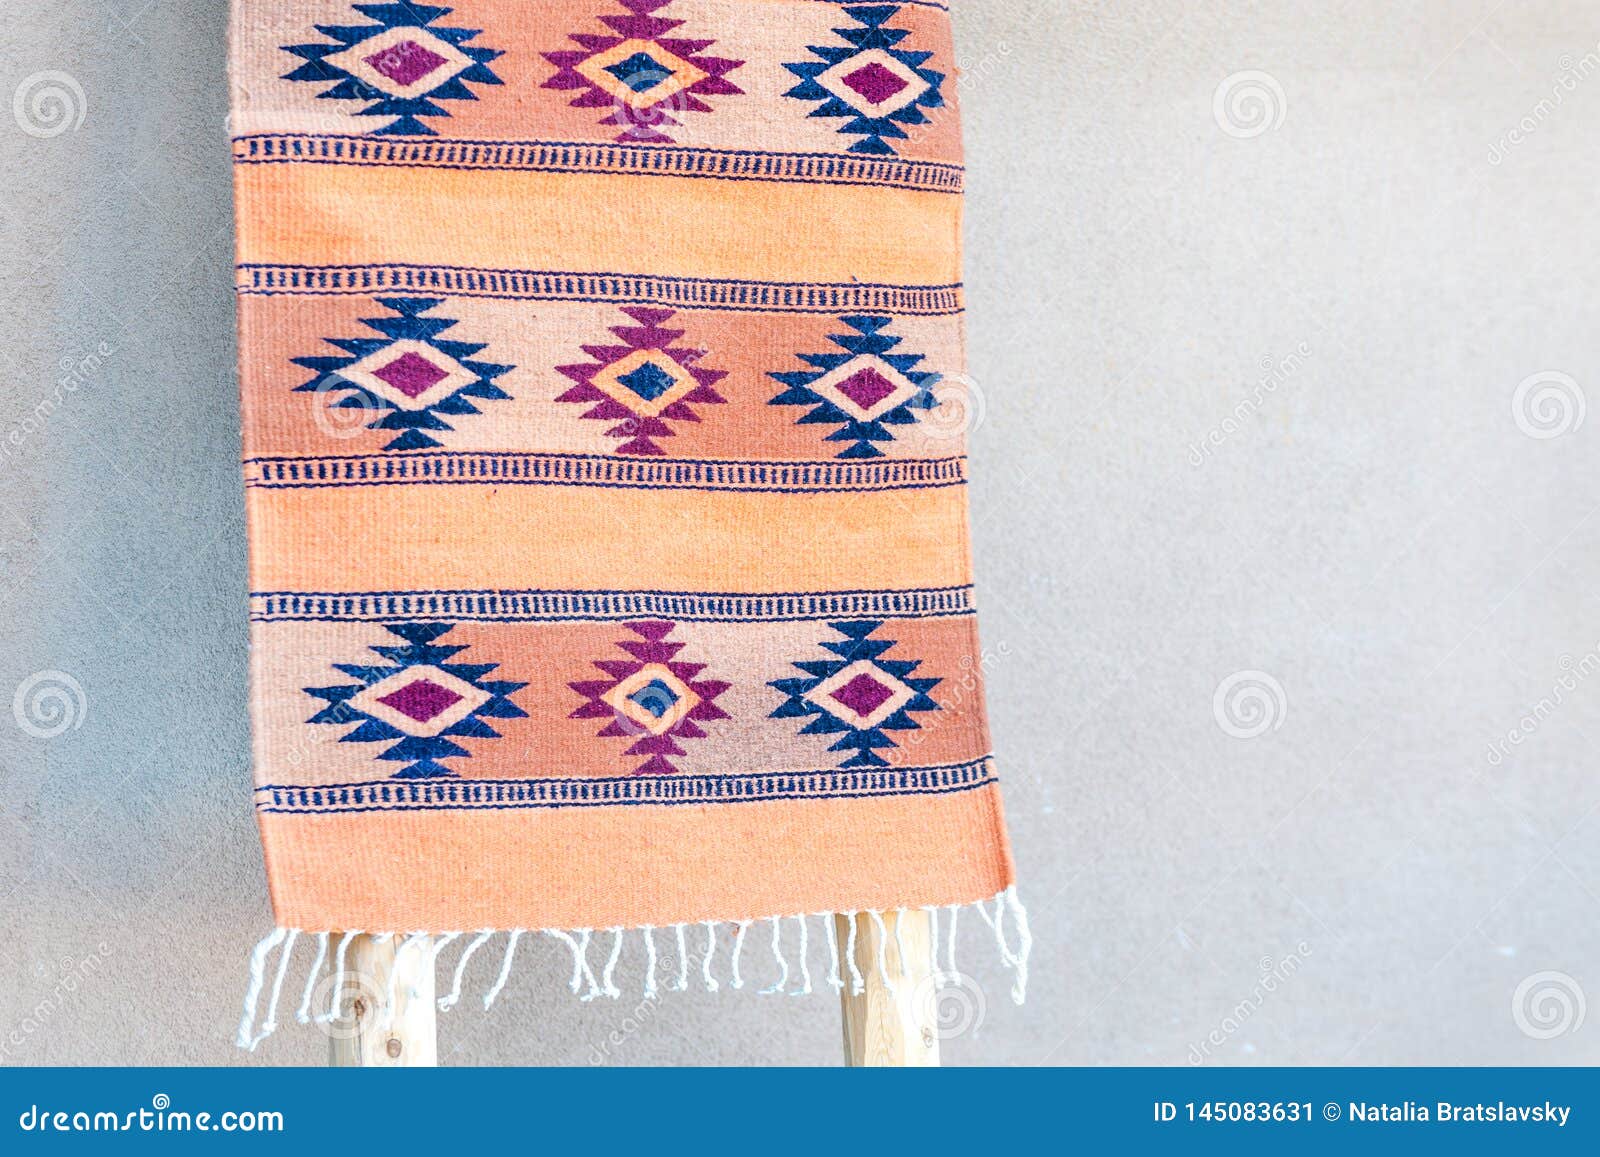 traditional southwestern rug